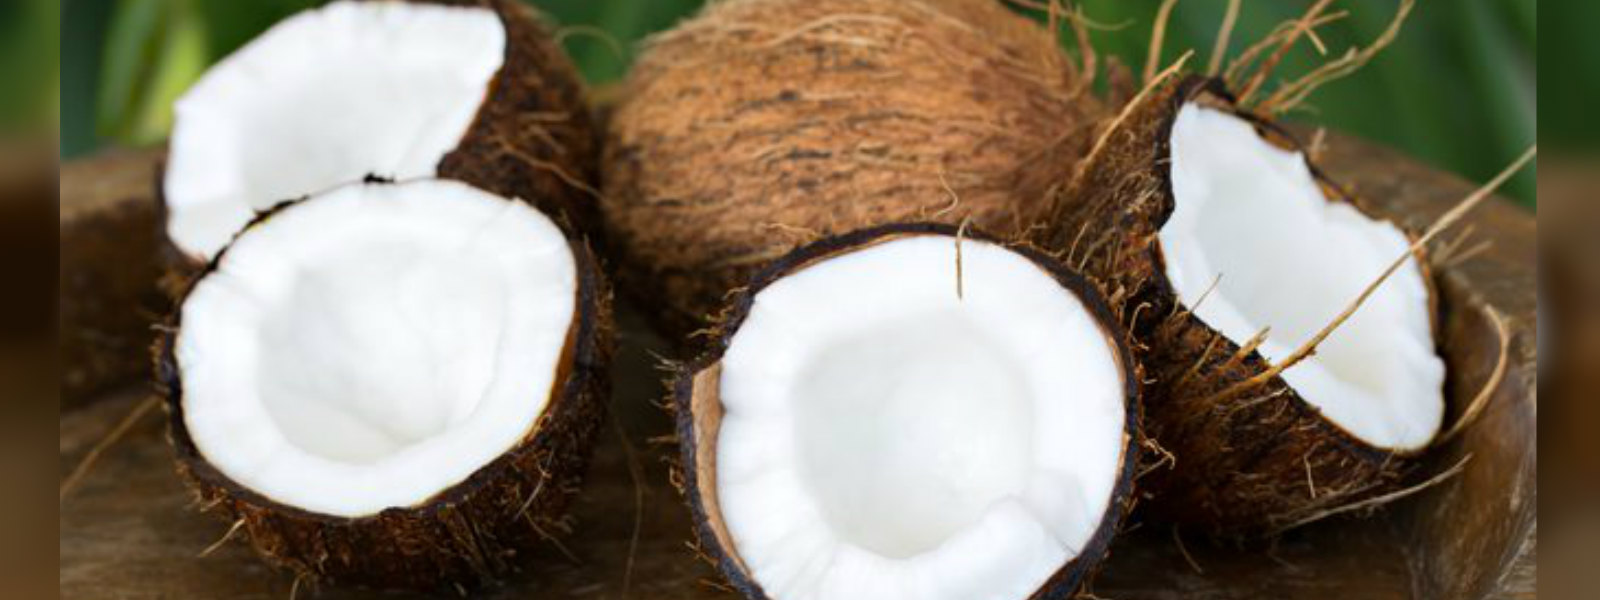 MRP fixed for coconuts in Sri Lanka